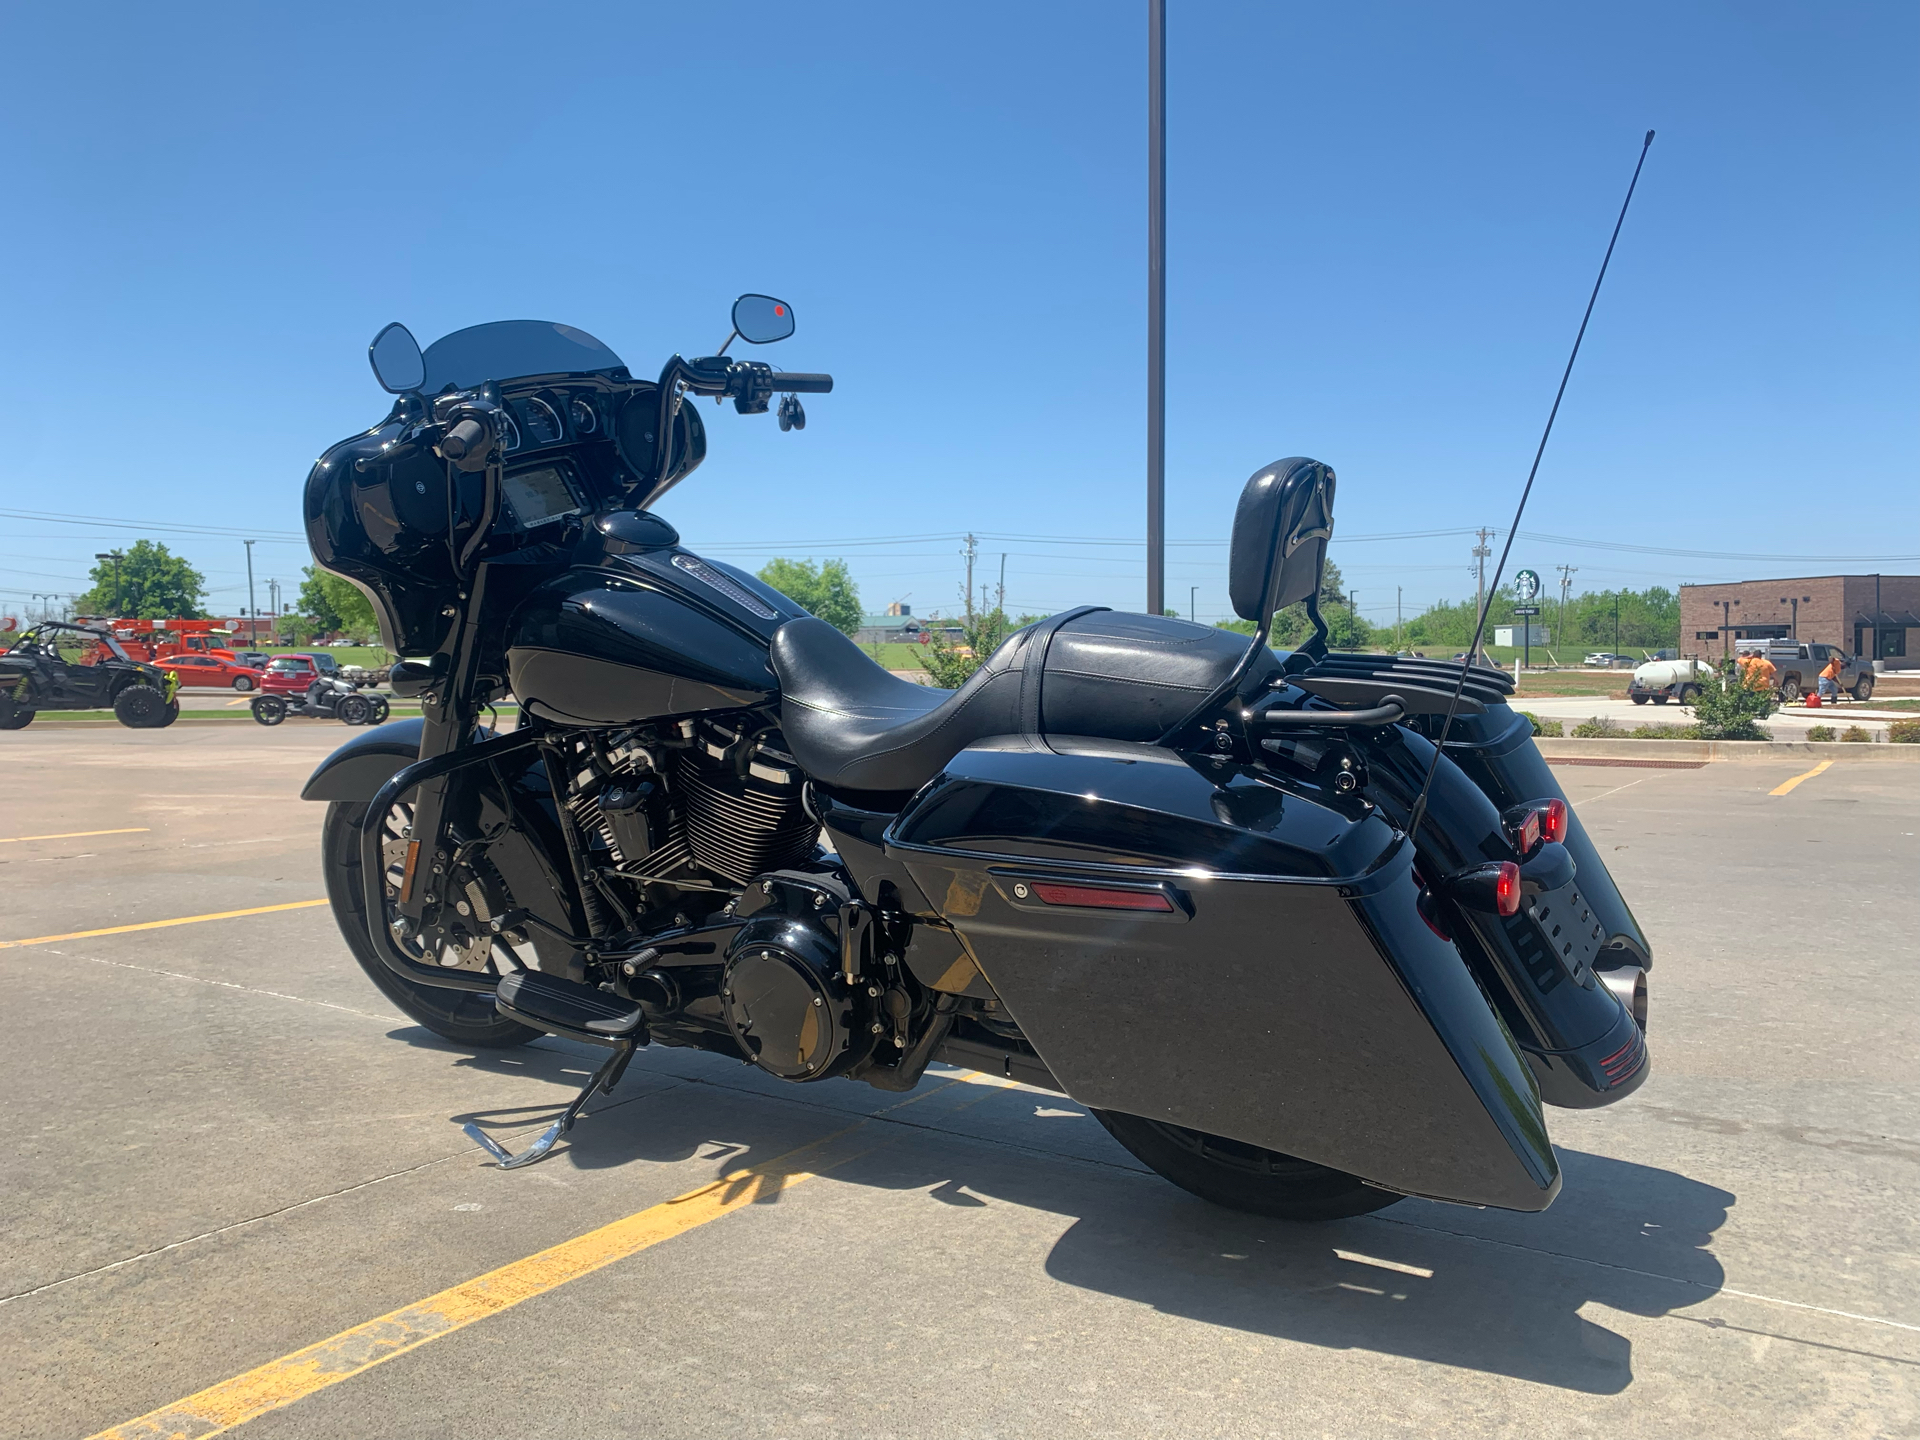 2018 Harley-Davidson Street Glide® Special in Norman, Oklahoma - Photo 6